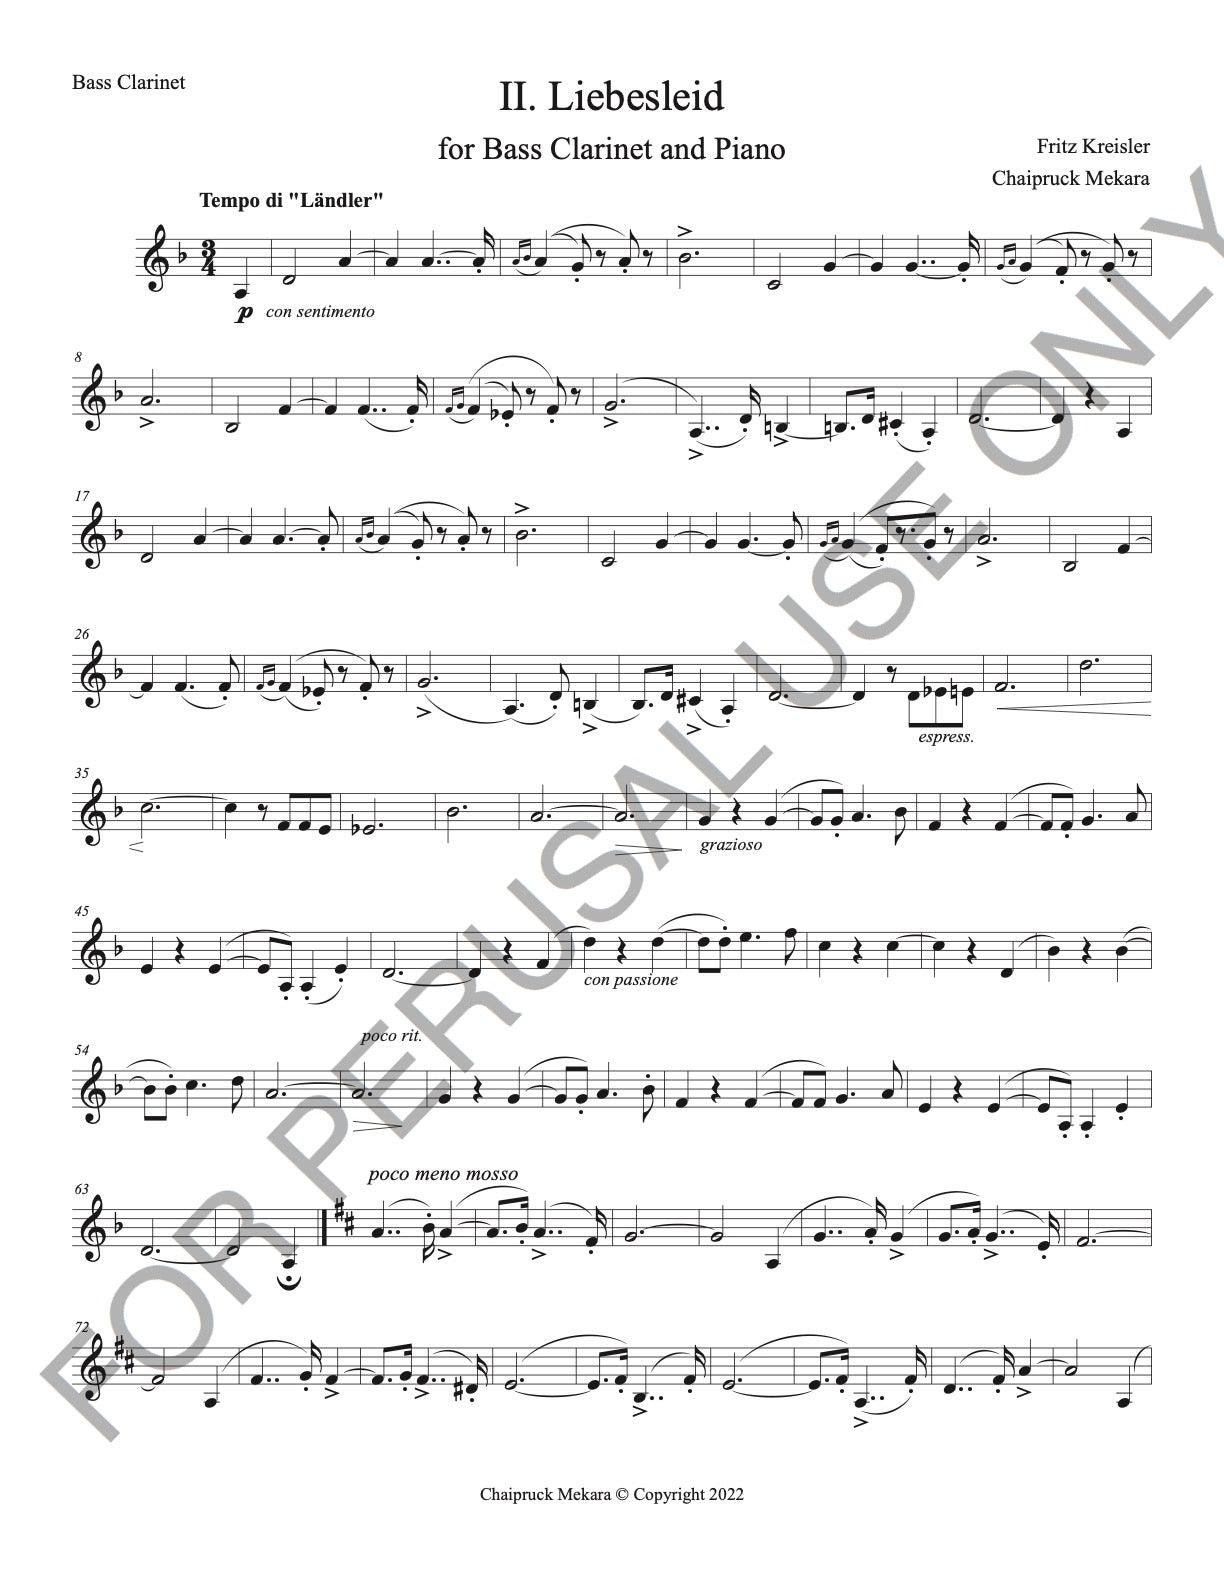 Bass Clarinet and Piano sheet music:Liebesleid (score+parts+mp3) - ChaipruckMekara